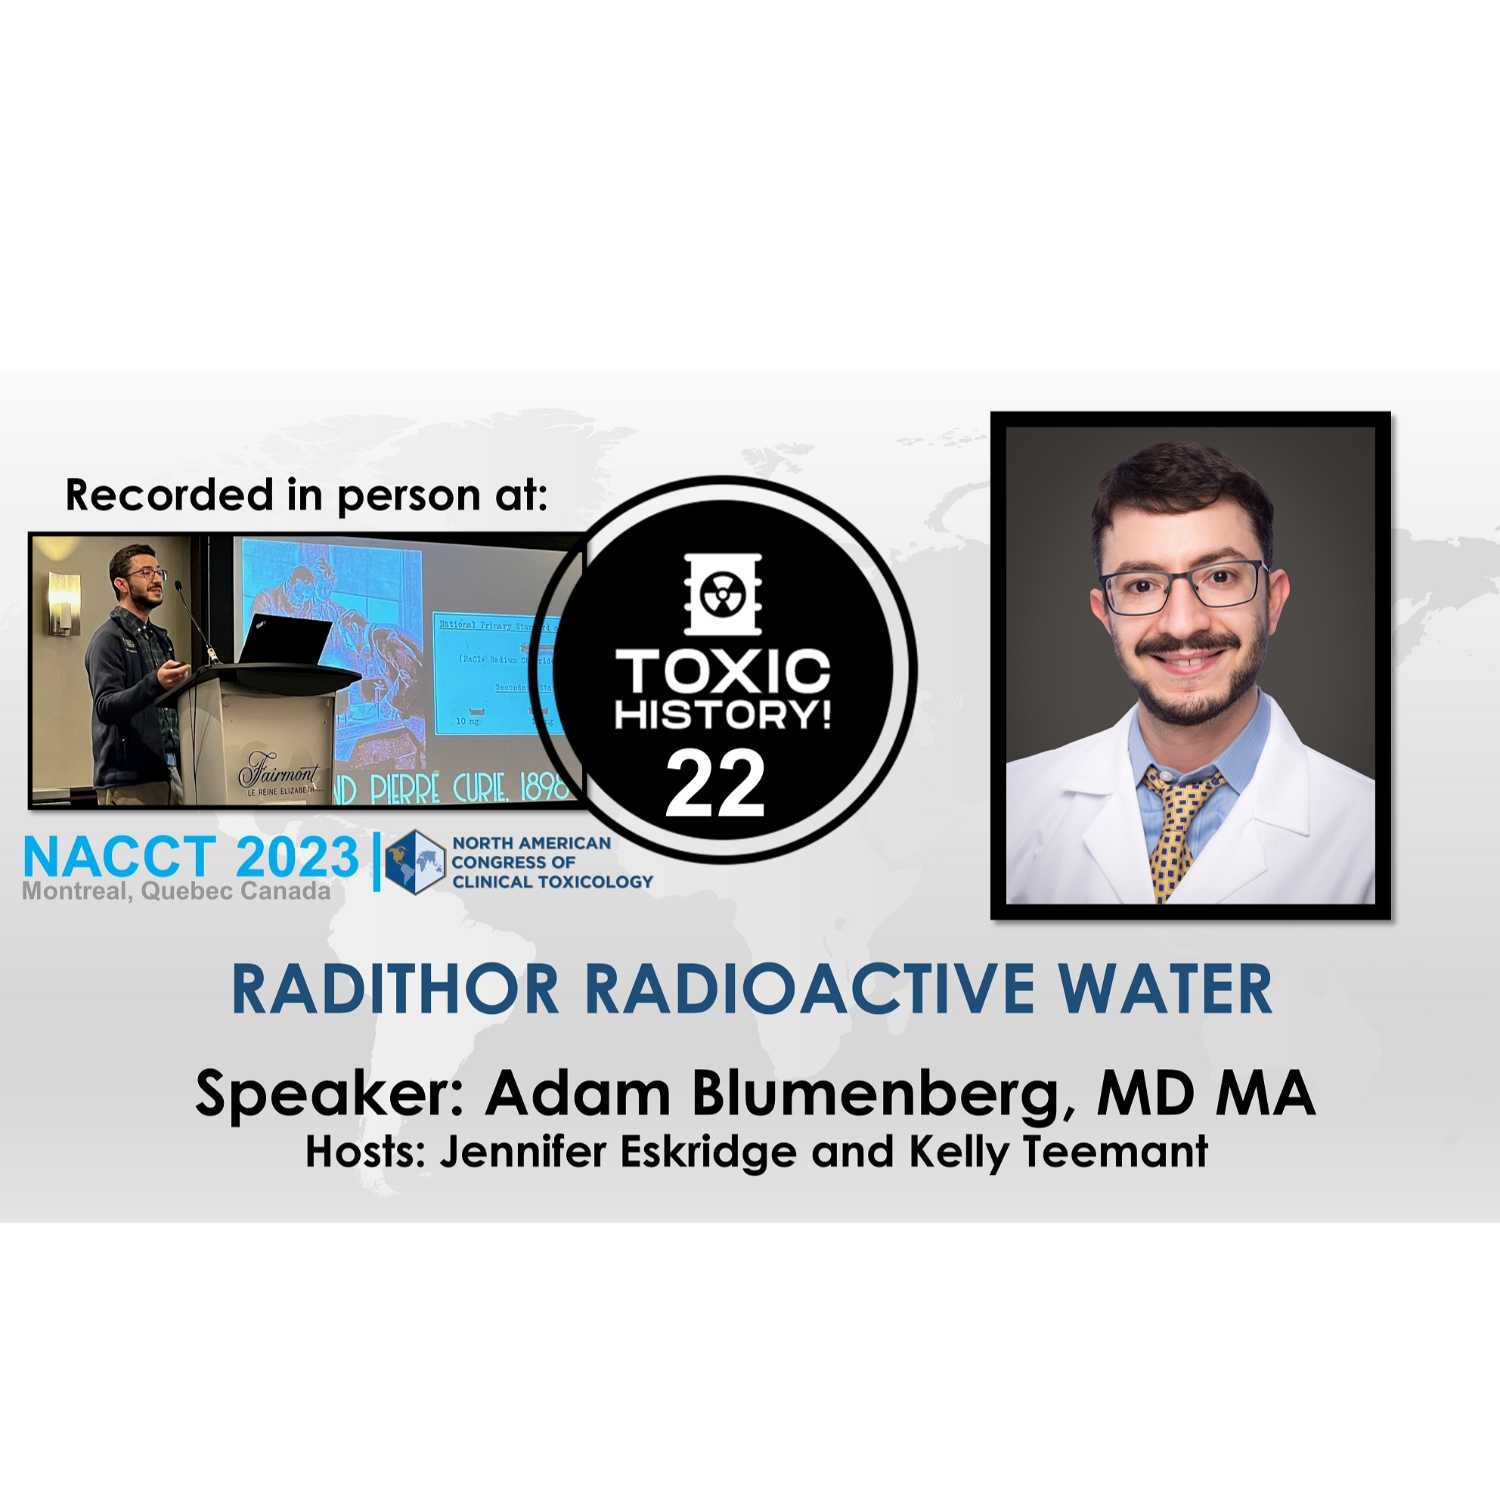 Radithor Radioactive Water